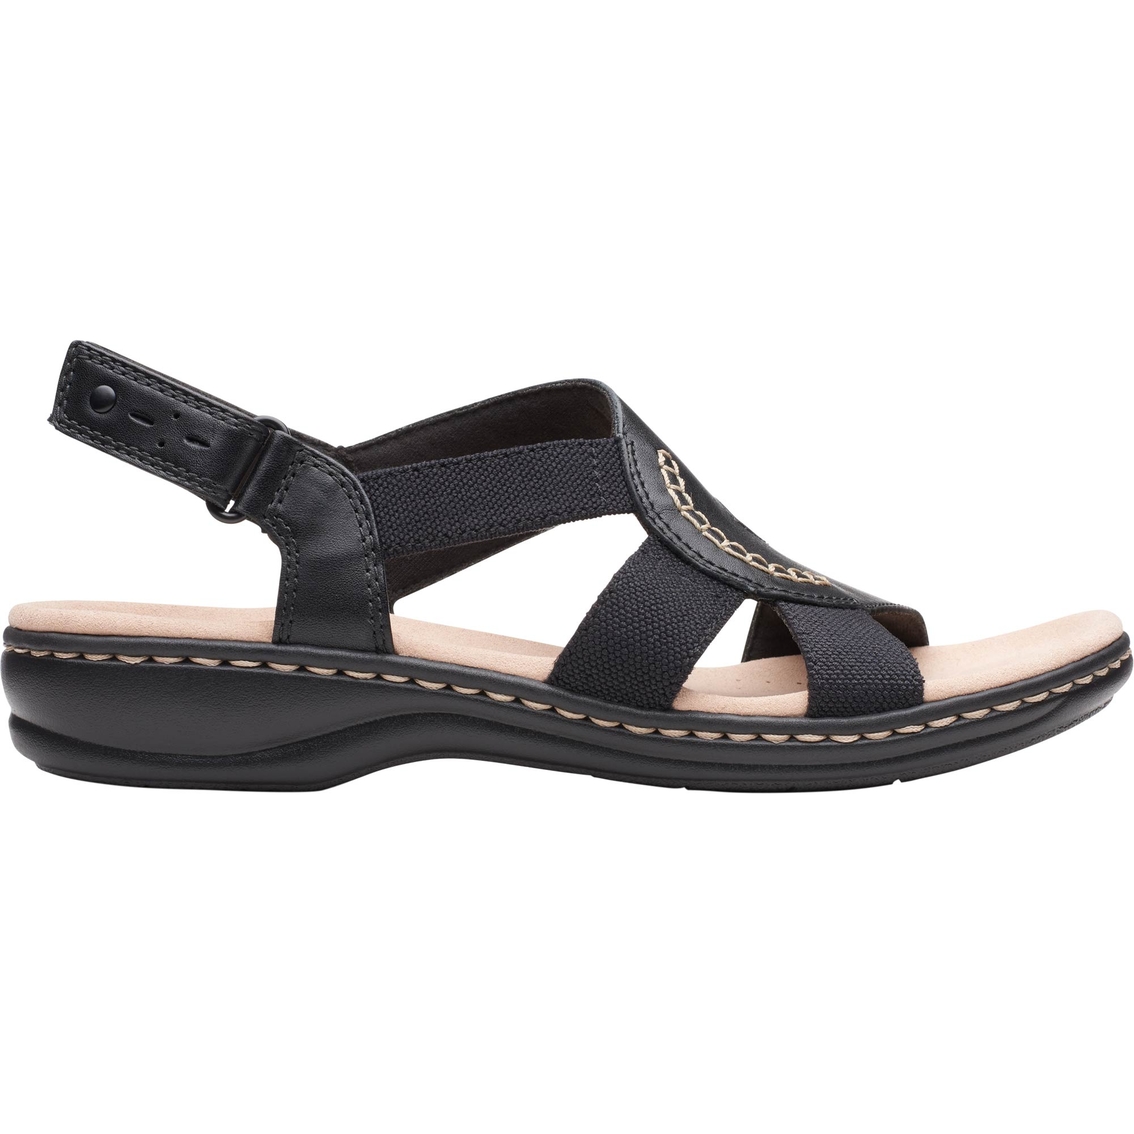 Clarks Leisa Joy Comfort Sandals | Sandals | Shoes | Shop The Exchange